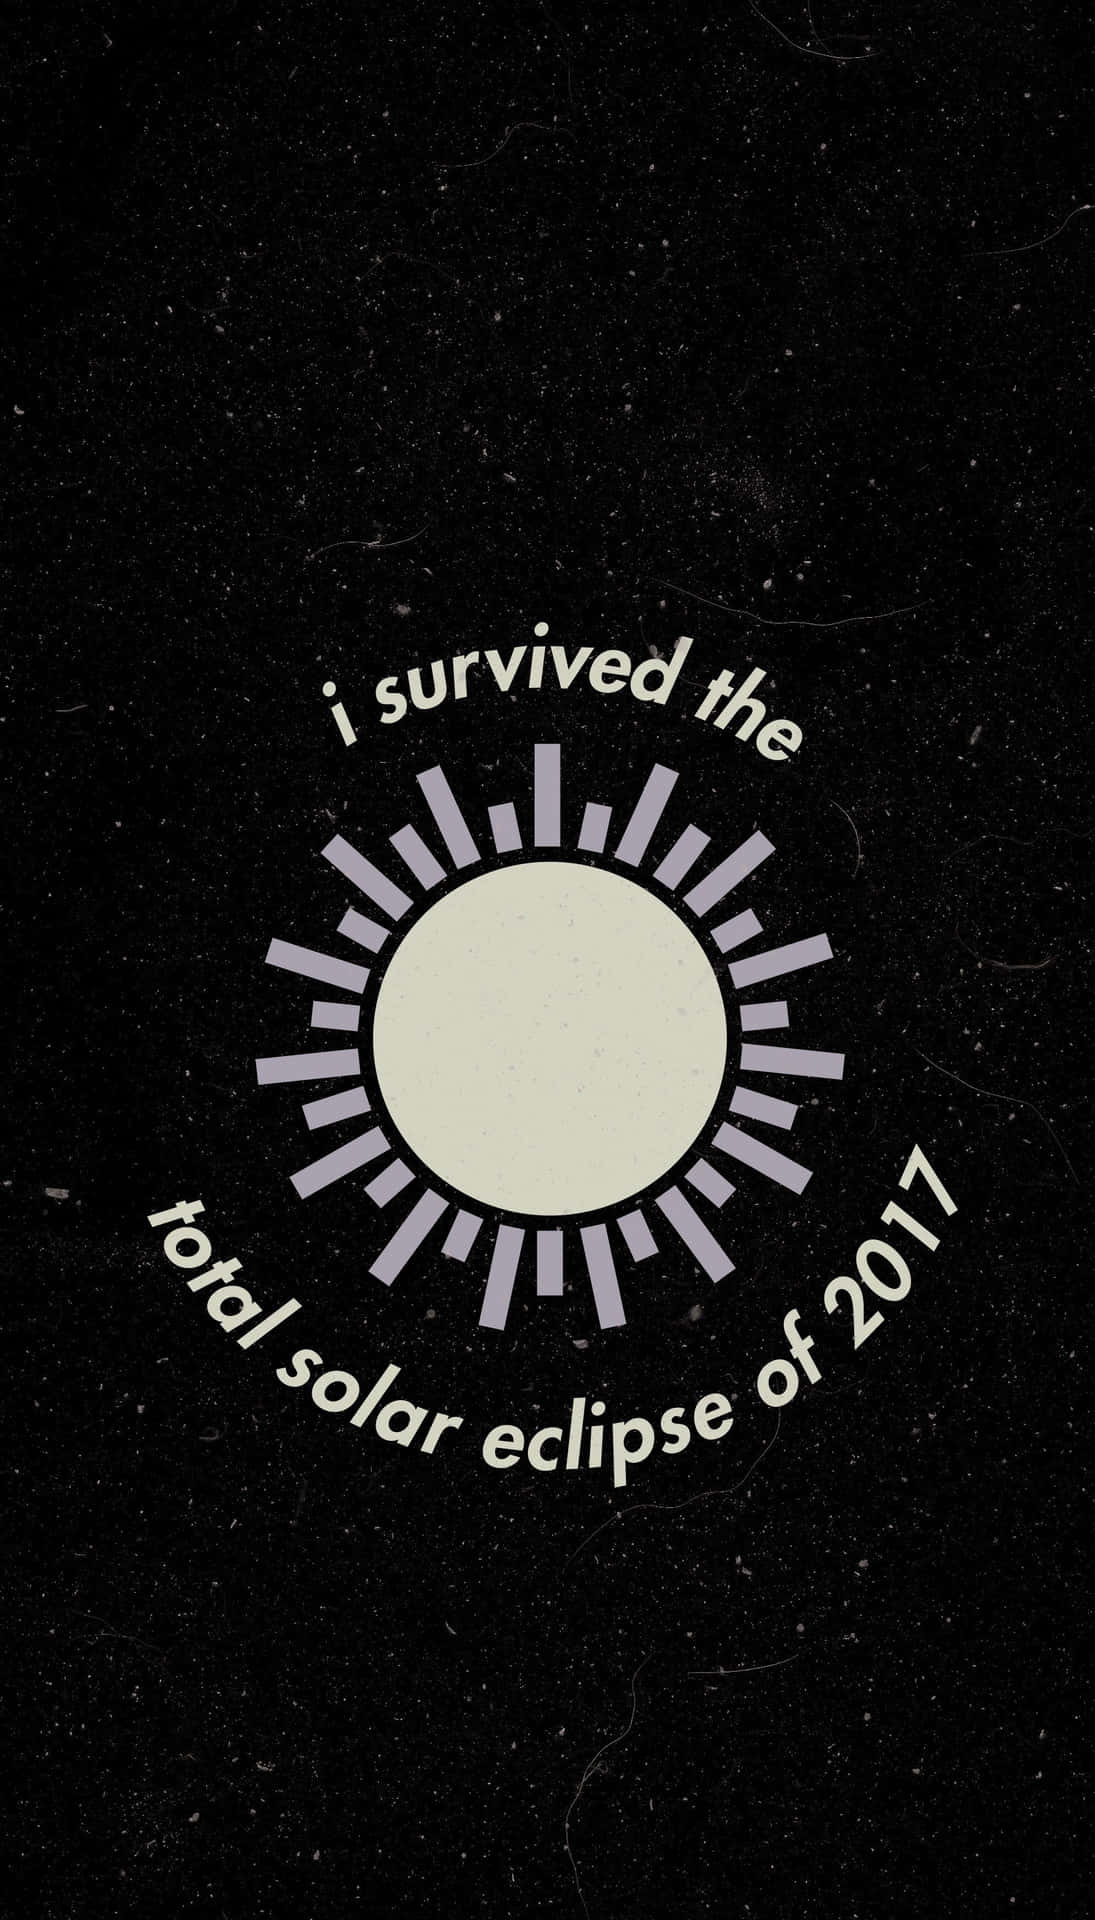 2017 Solar Eclipse Survivor Graphic Wallpaper